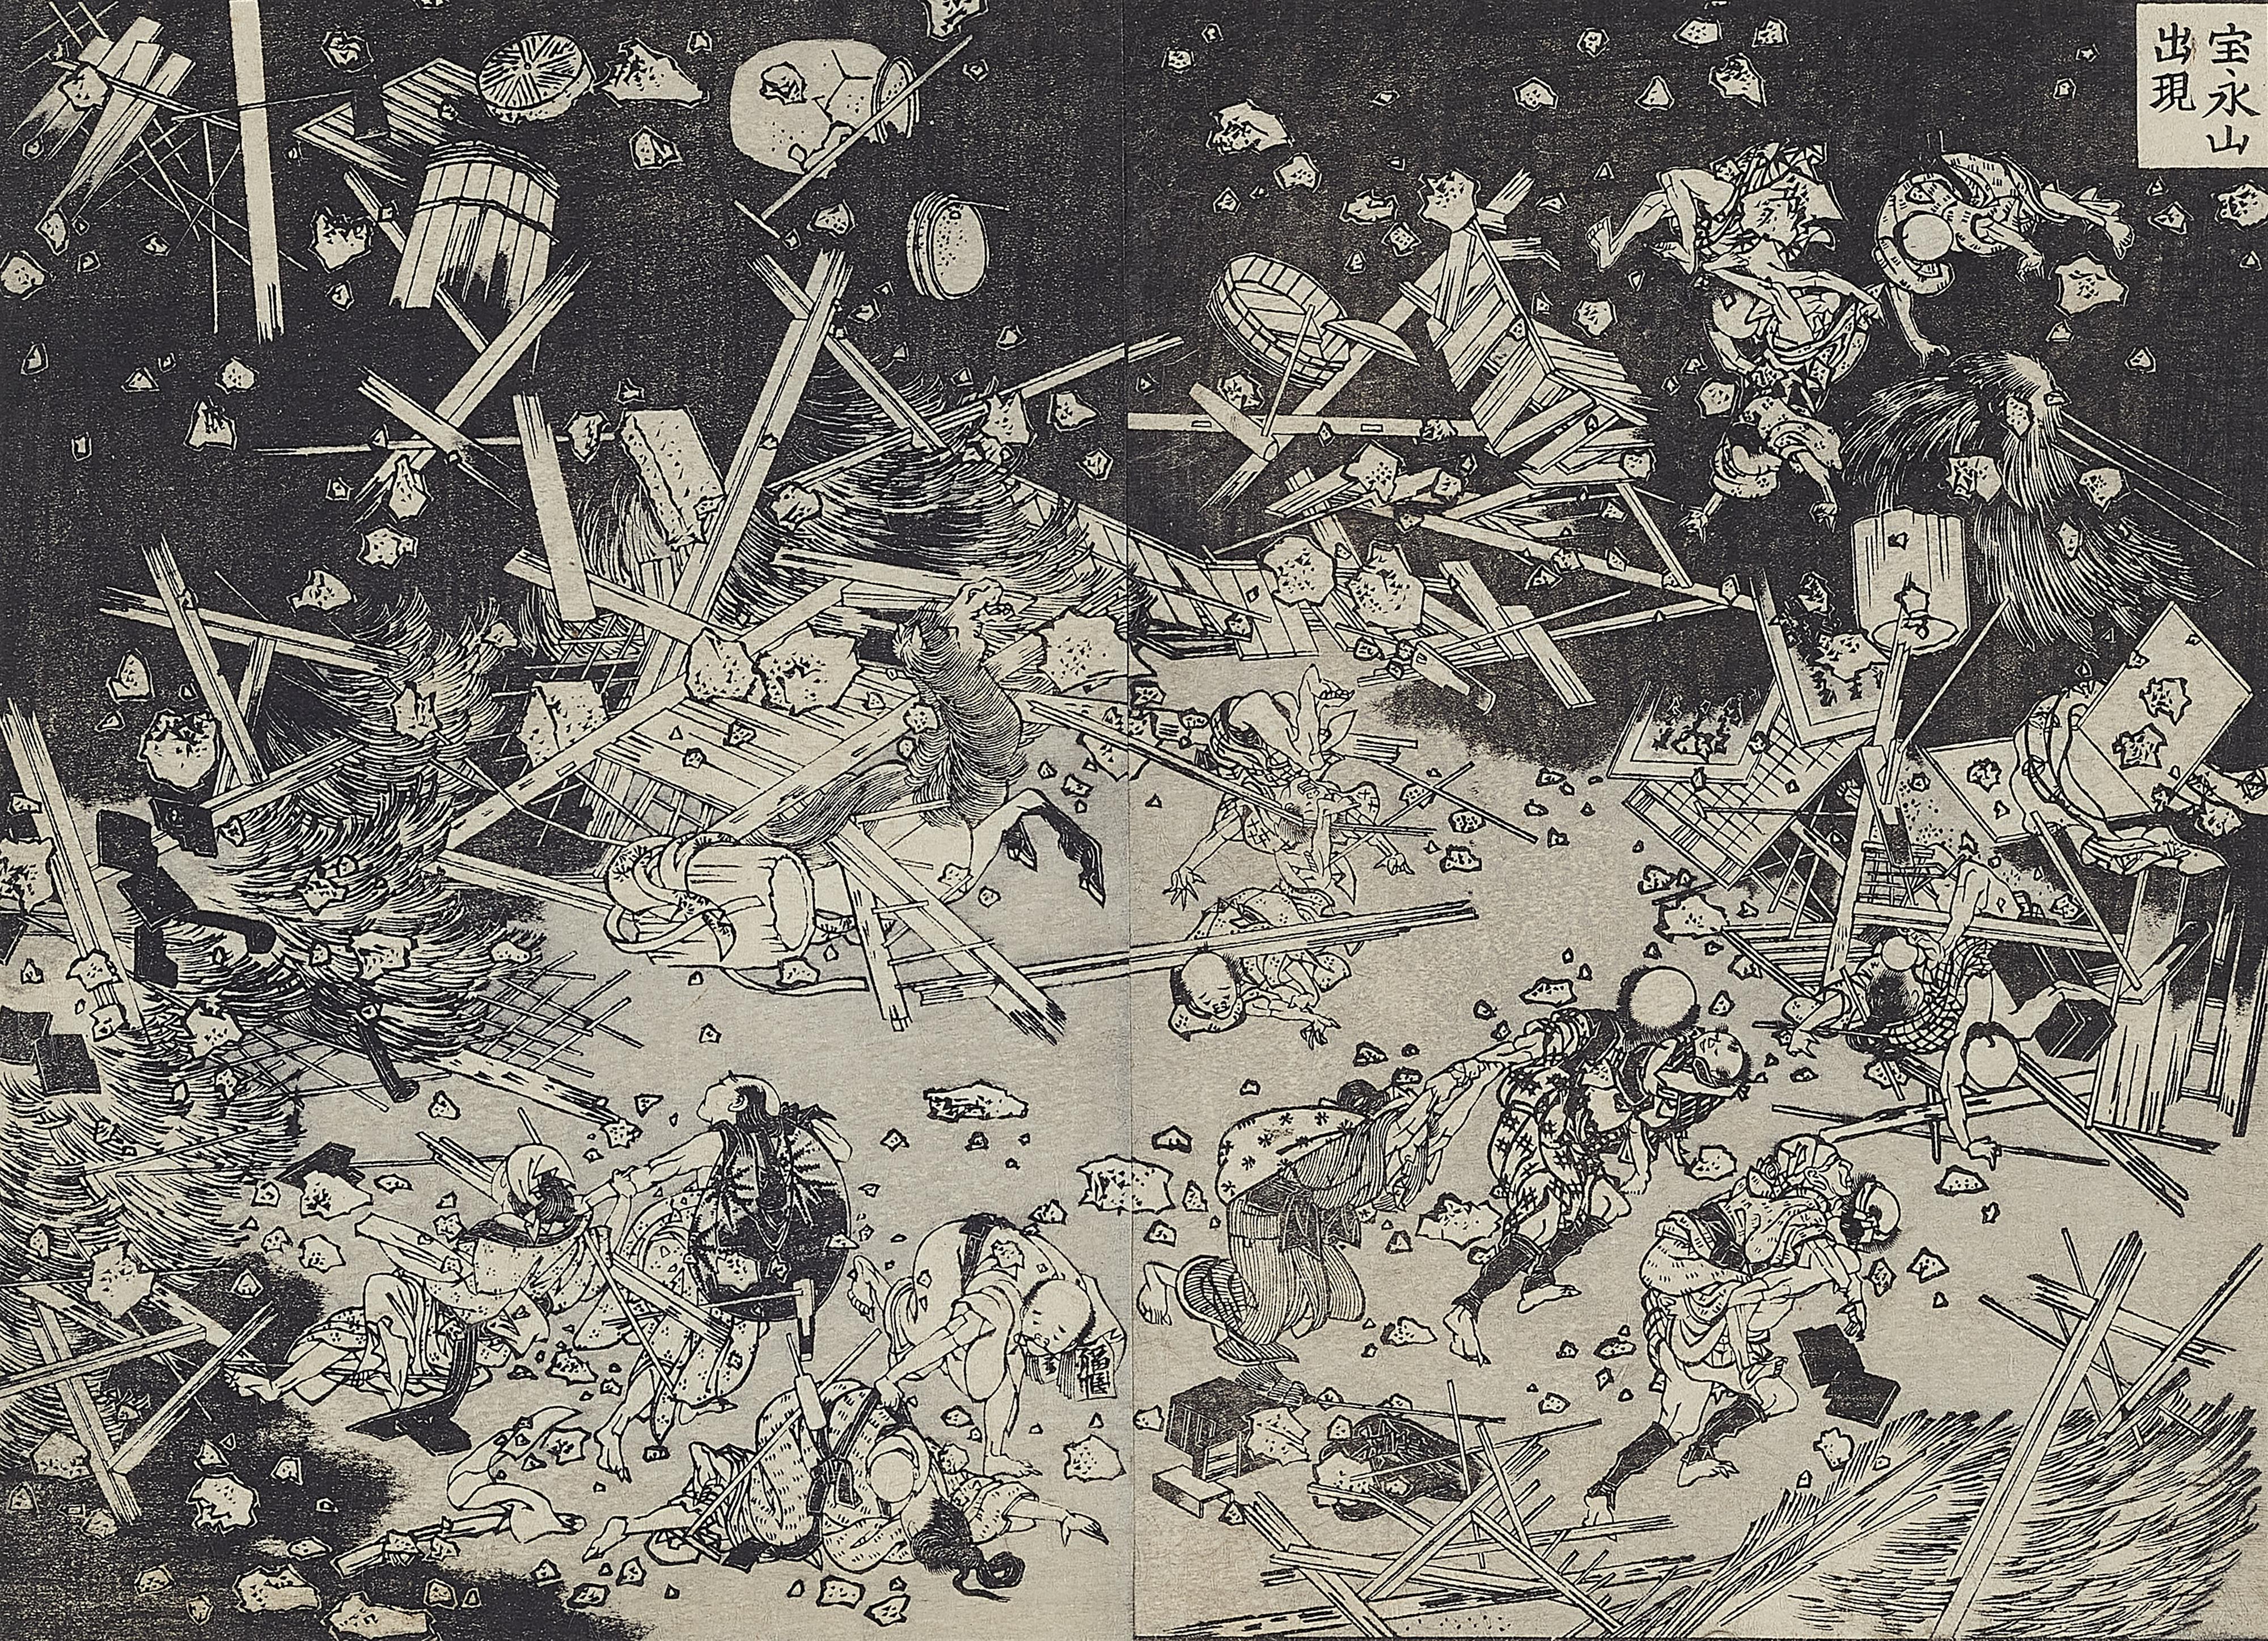 Katsushika Hokusai - Black and white illustrations from the album Fugaku hyakkei - image-17